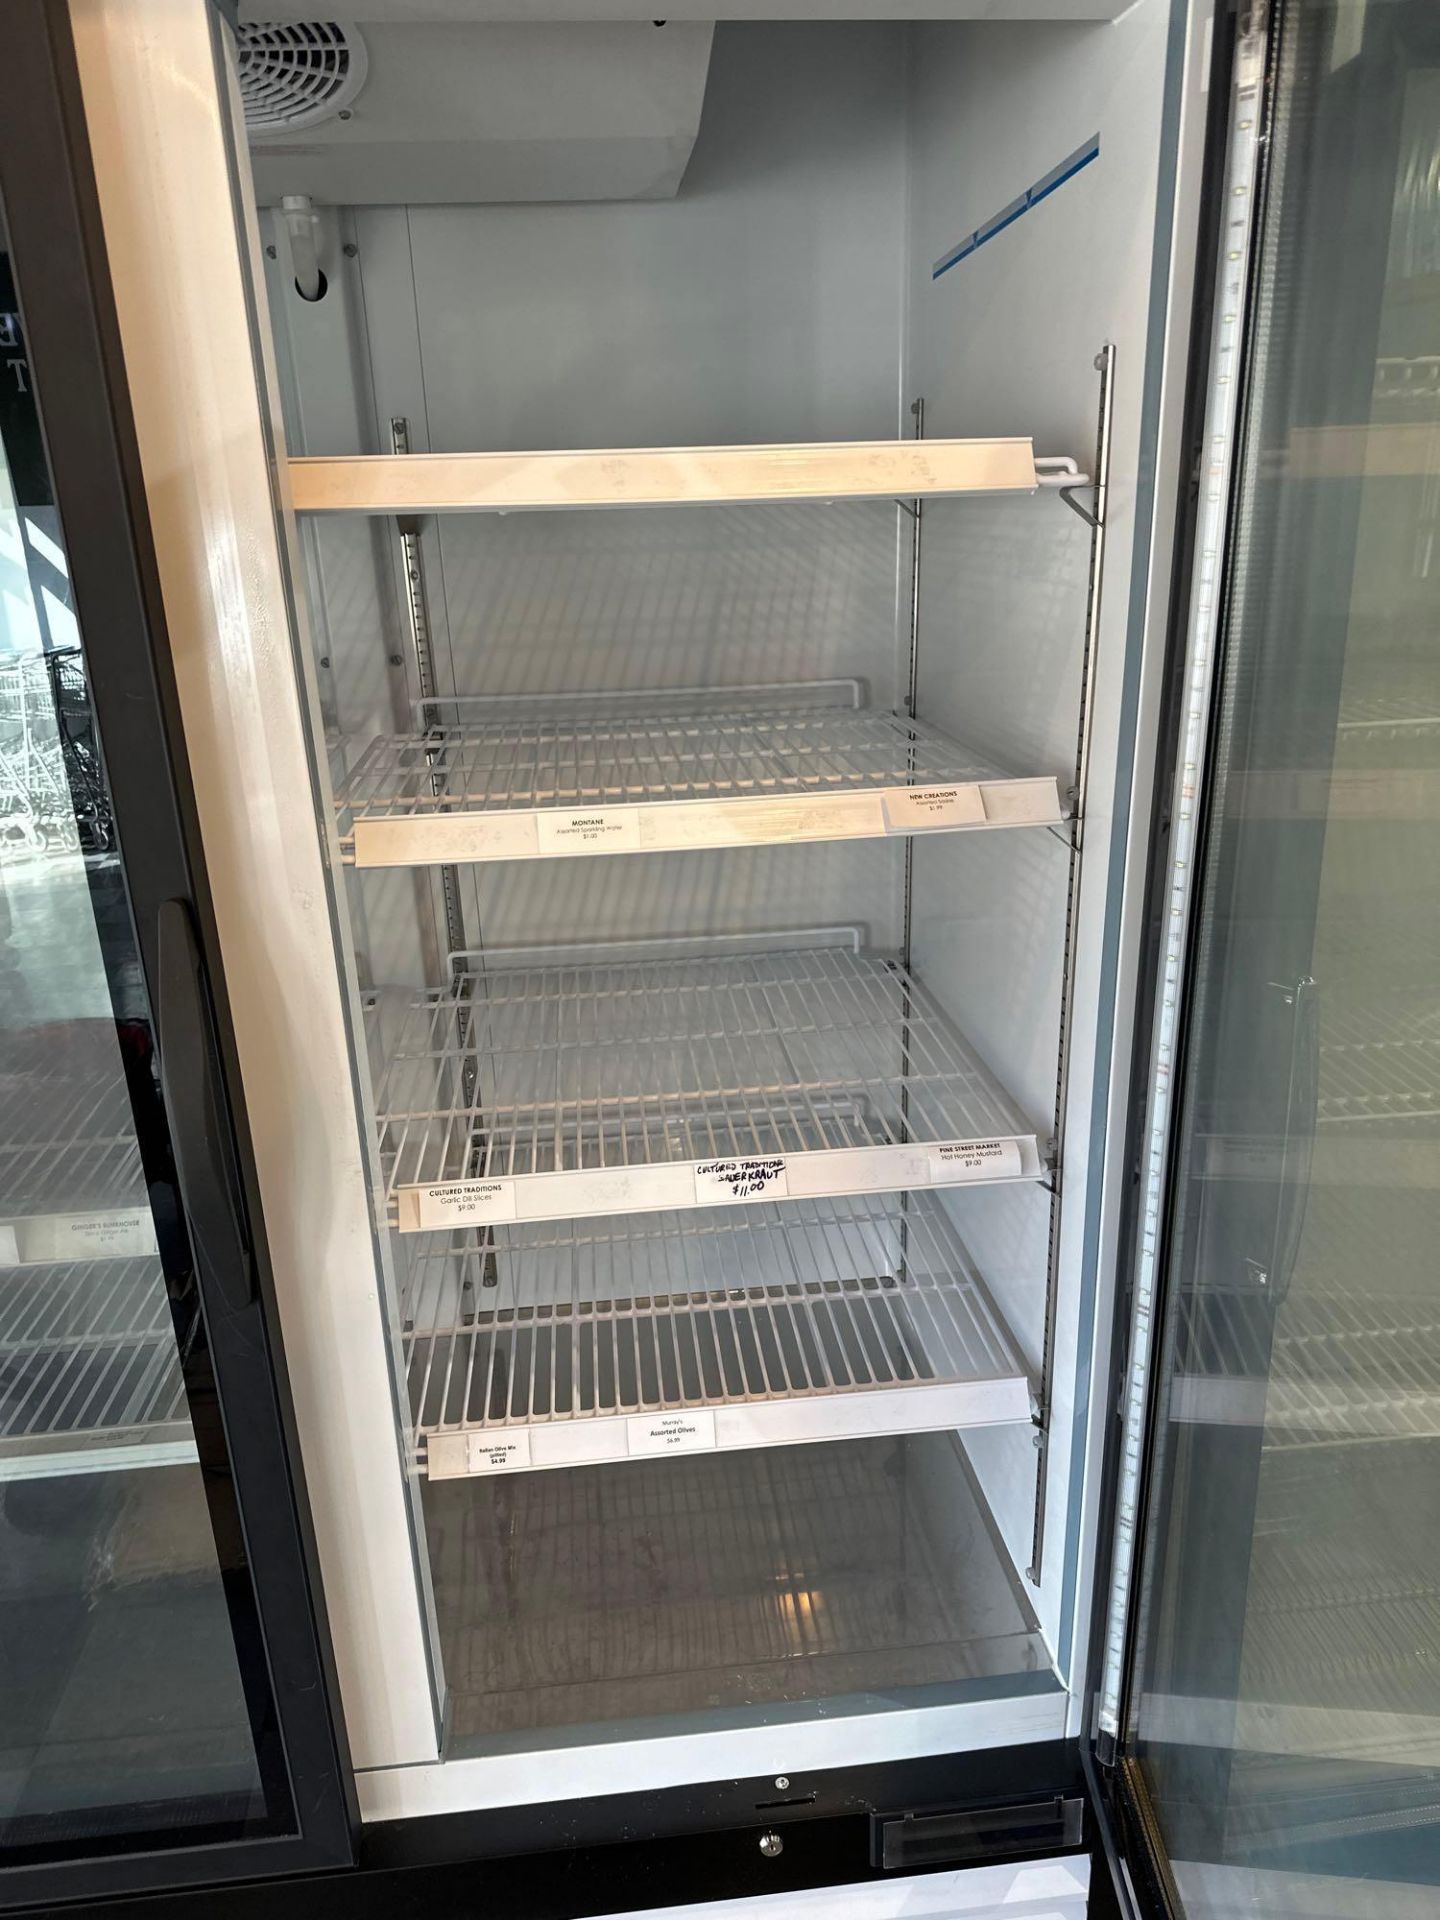 Serv-Ware 2 door refrigerator Model GR-48-HC (Purchase new 2022) - Image 3 of 4